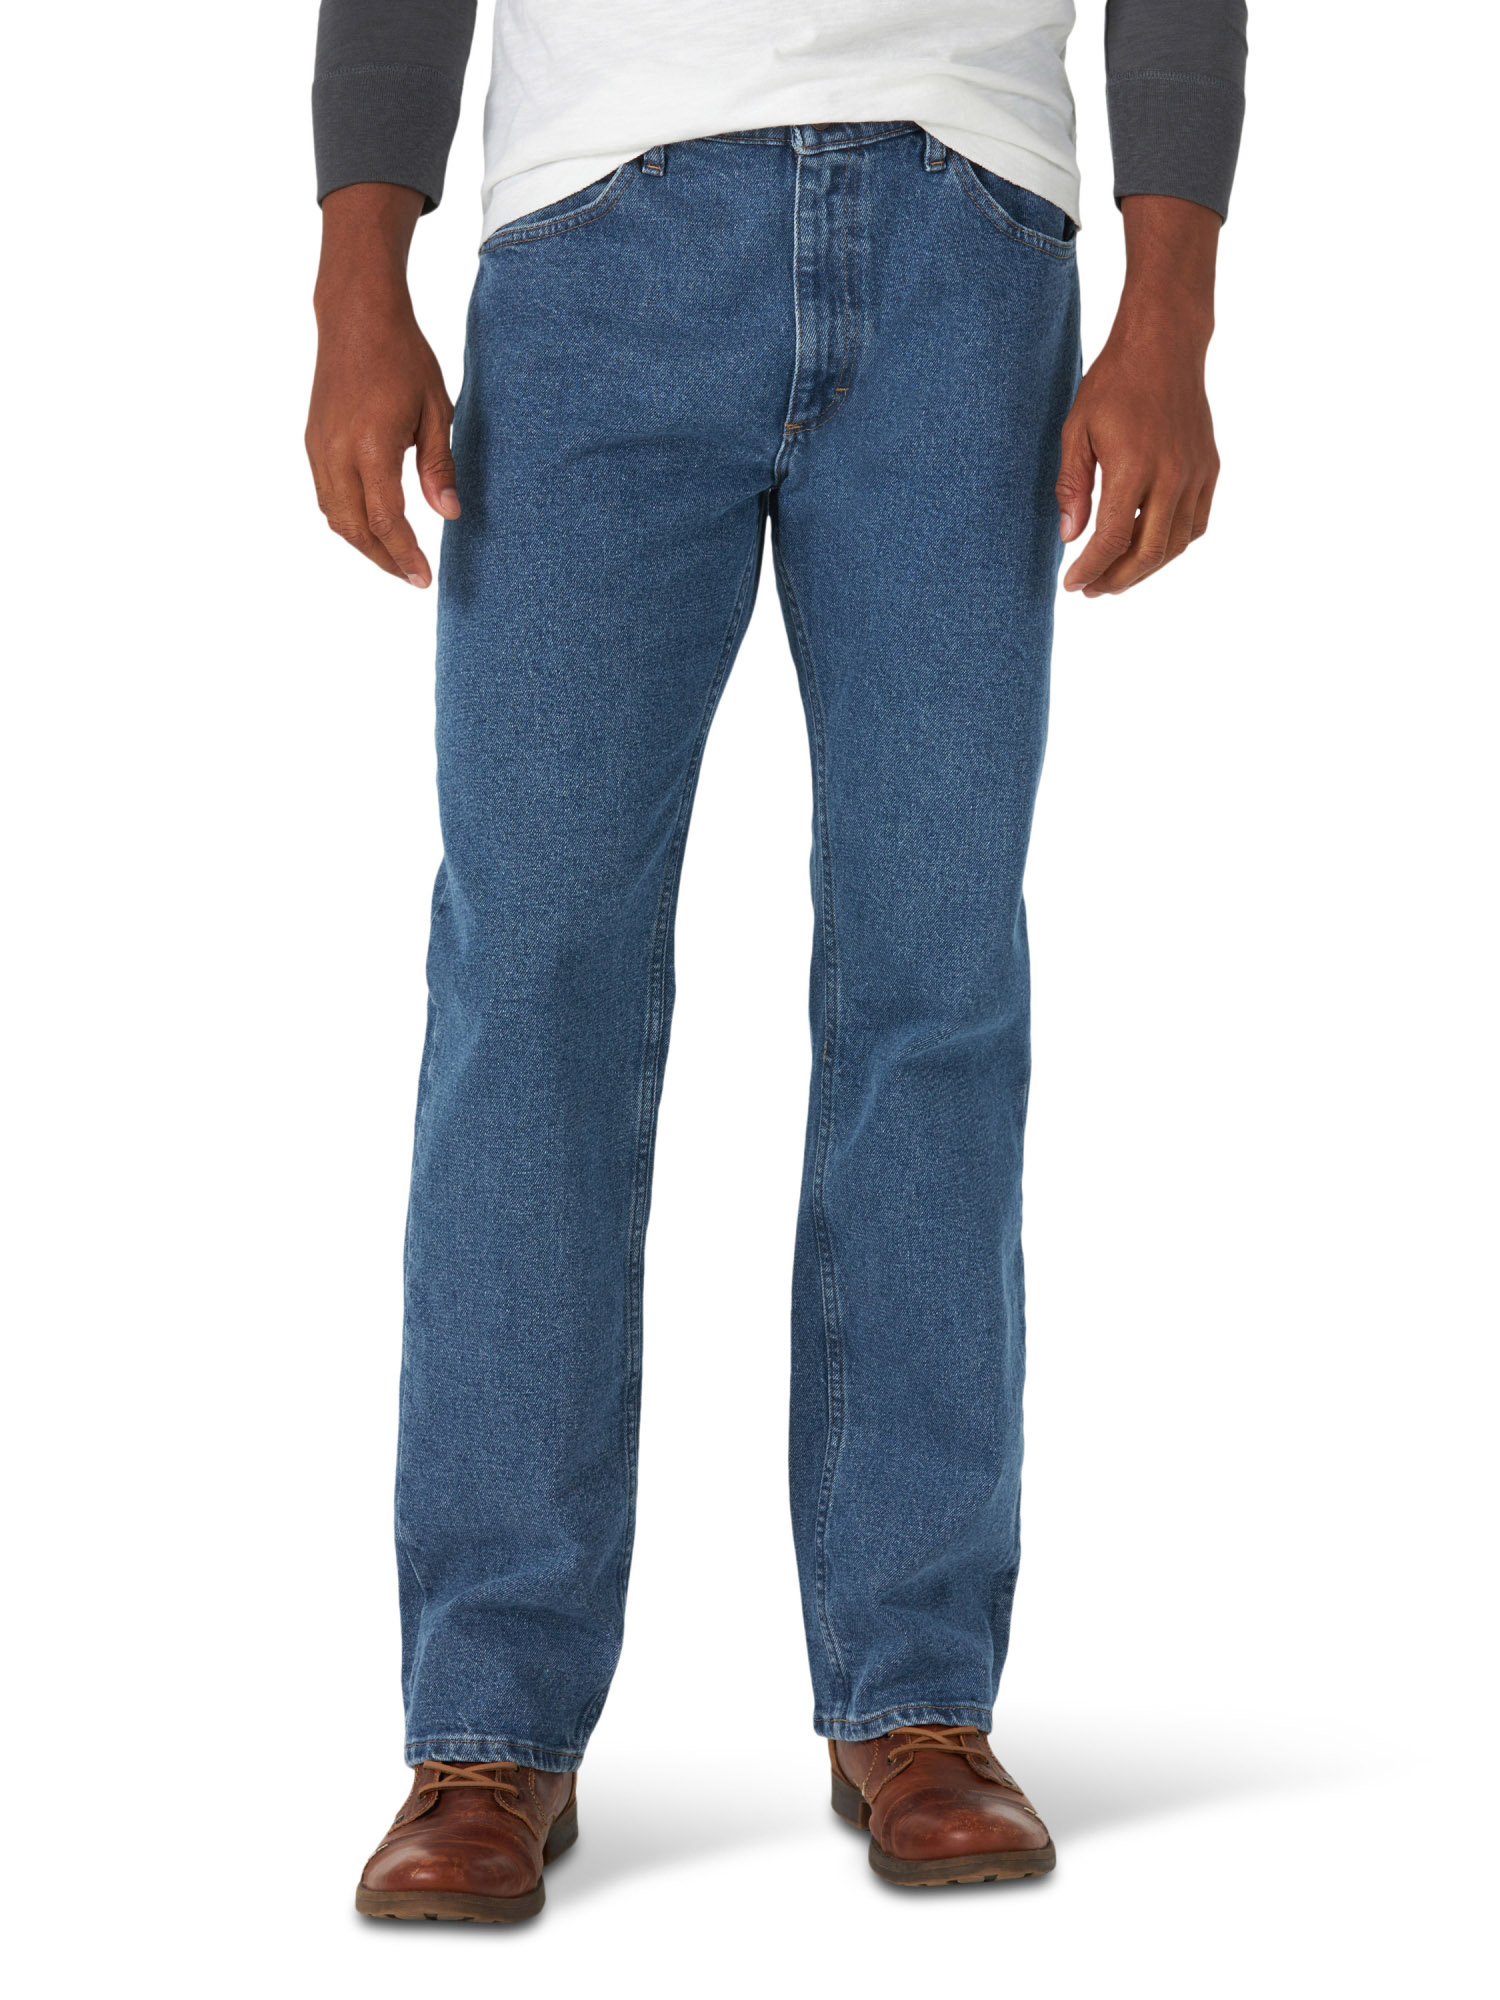 Wrangler Men's and Big Men's Regular Fit Jeans with Flex - image 1 of 8